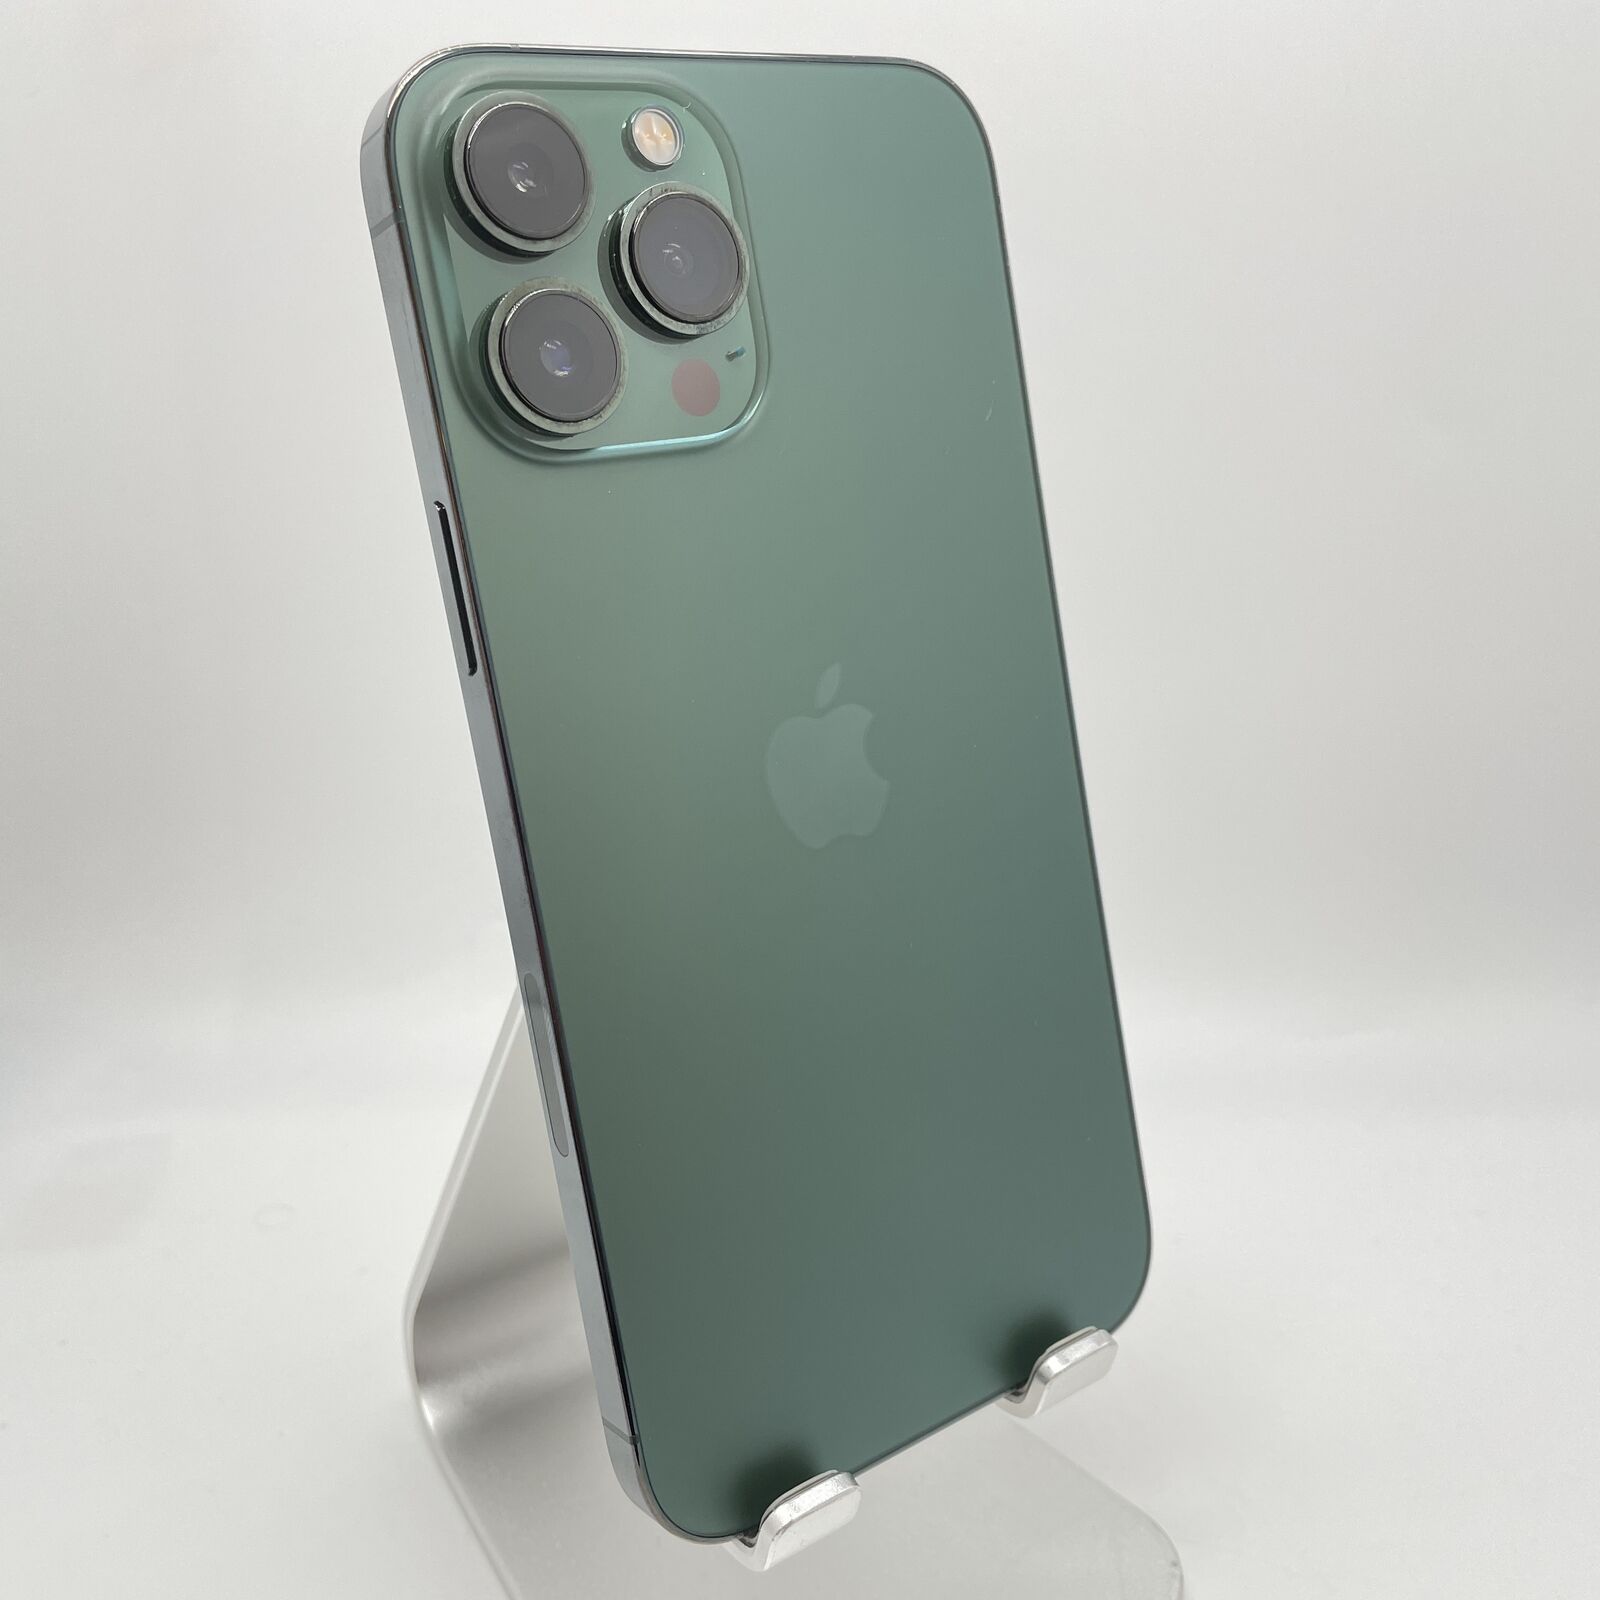 Apple iPhone 13 Pro Max - 256GB - Alpine Green (Unlocked) for sale 